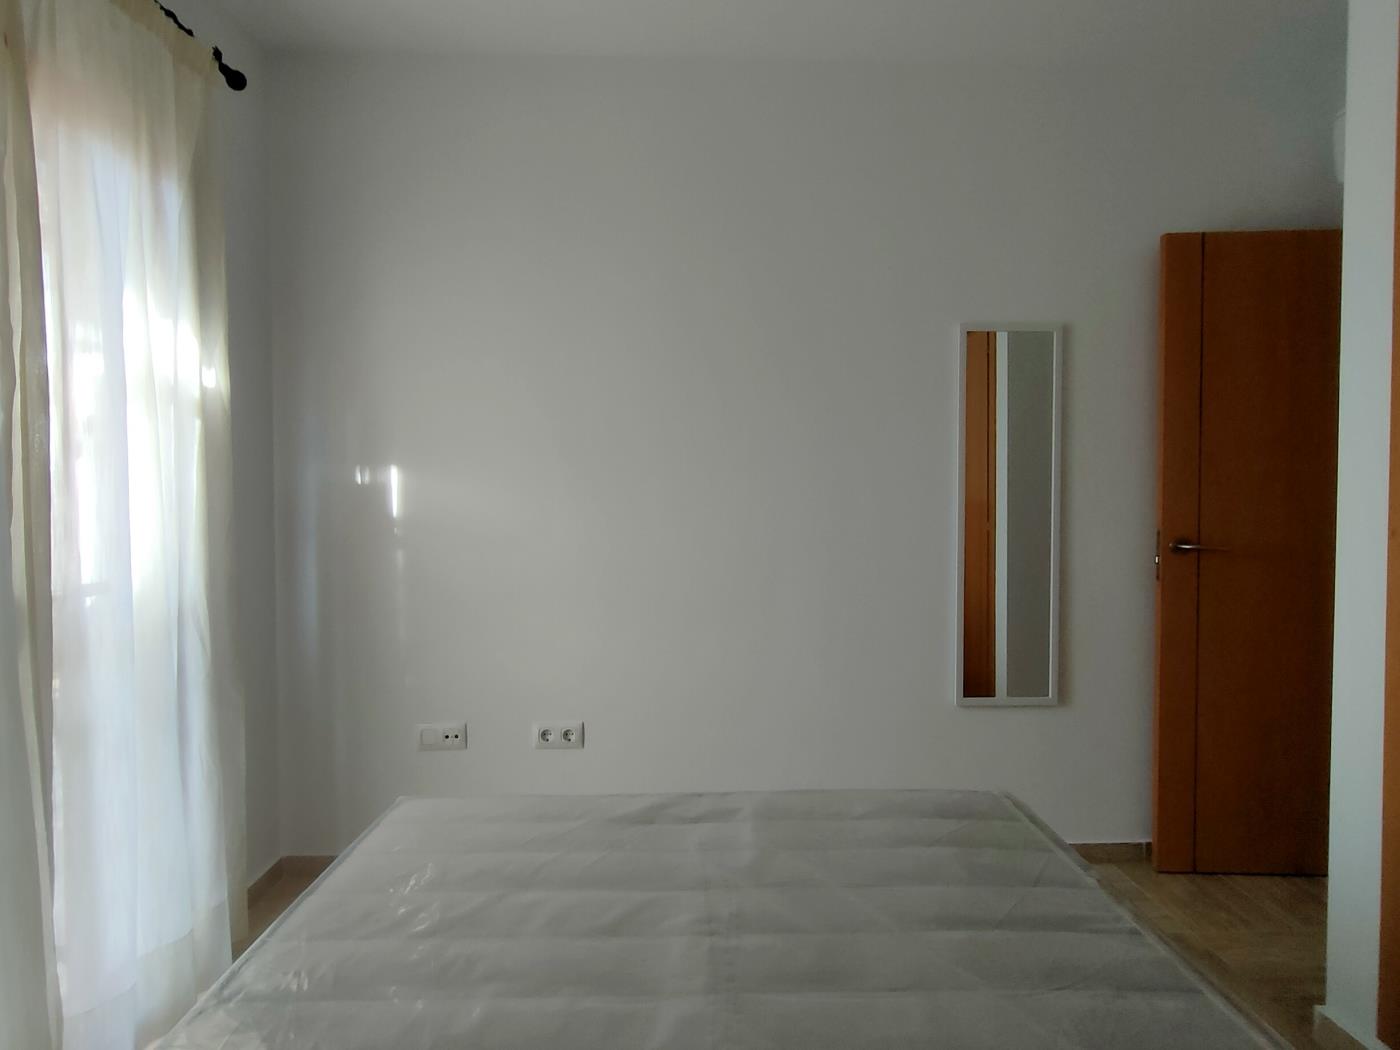 Ref. A6. Two-bedroom apartment on the second floor in Chiclana de la frontera